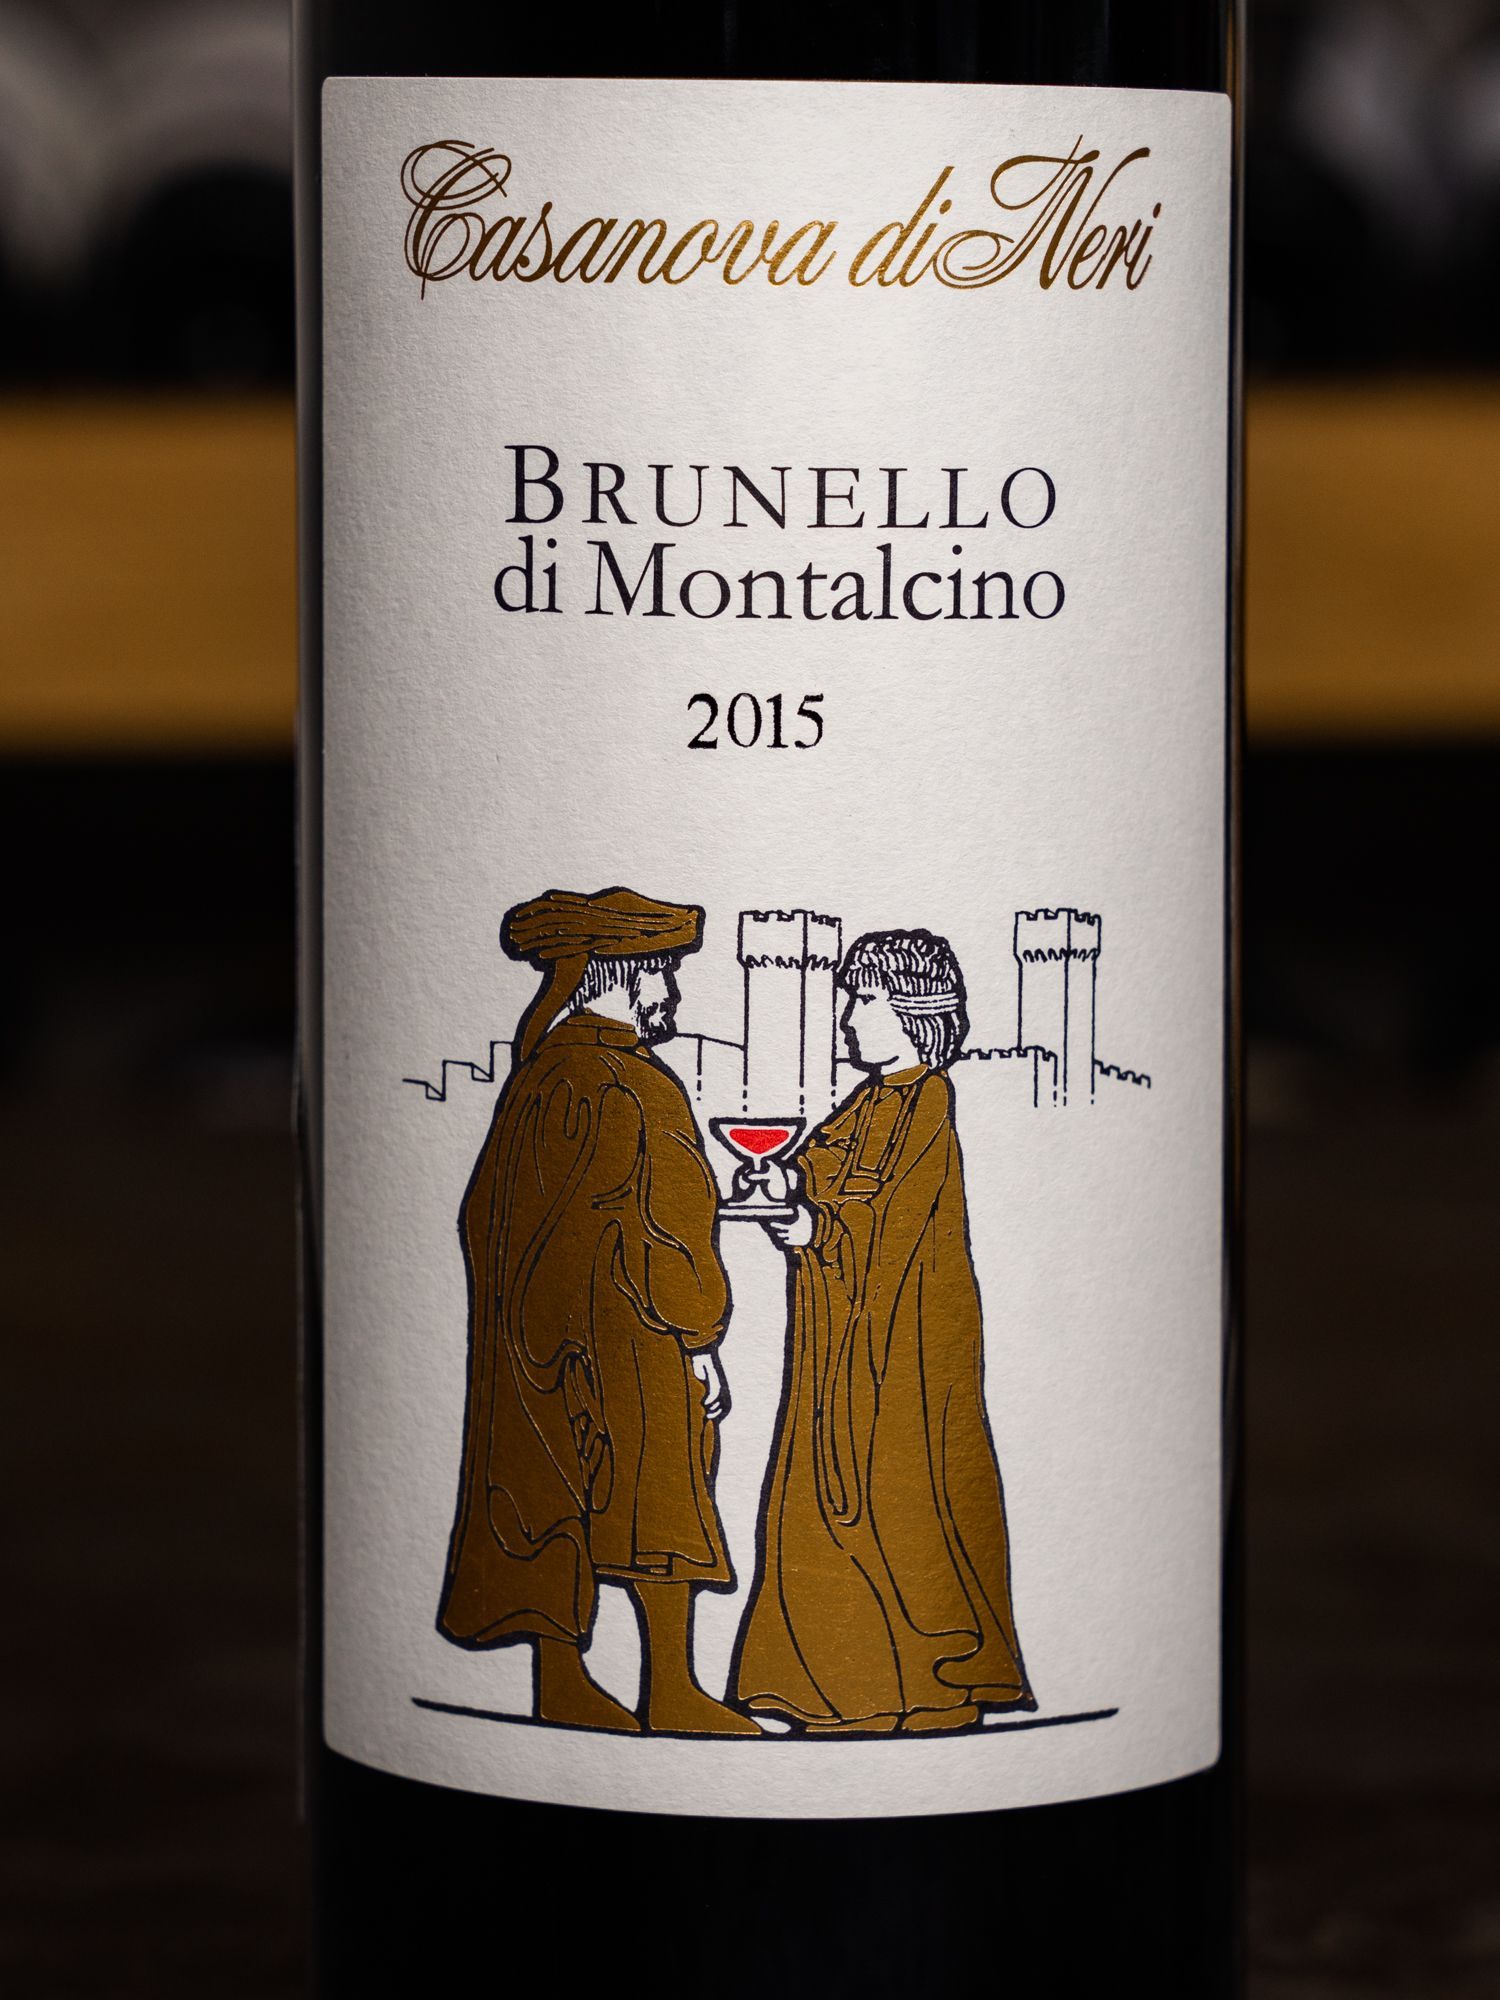 Вино Brunello di Montalcino Figuranti, Casanova di Neri / Брунелло ди Монтальчино Фигуранти Казанова ди Нери